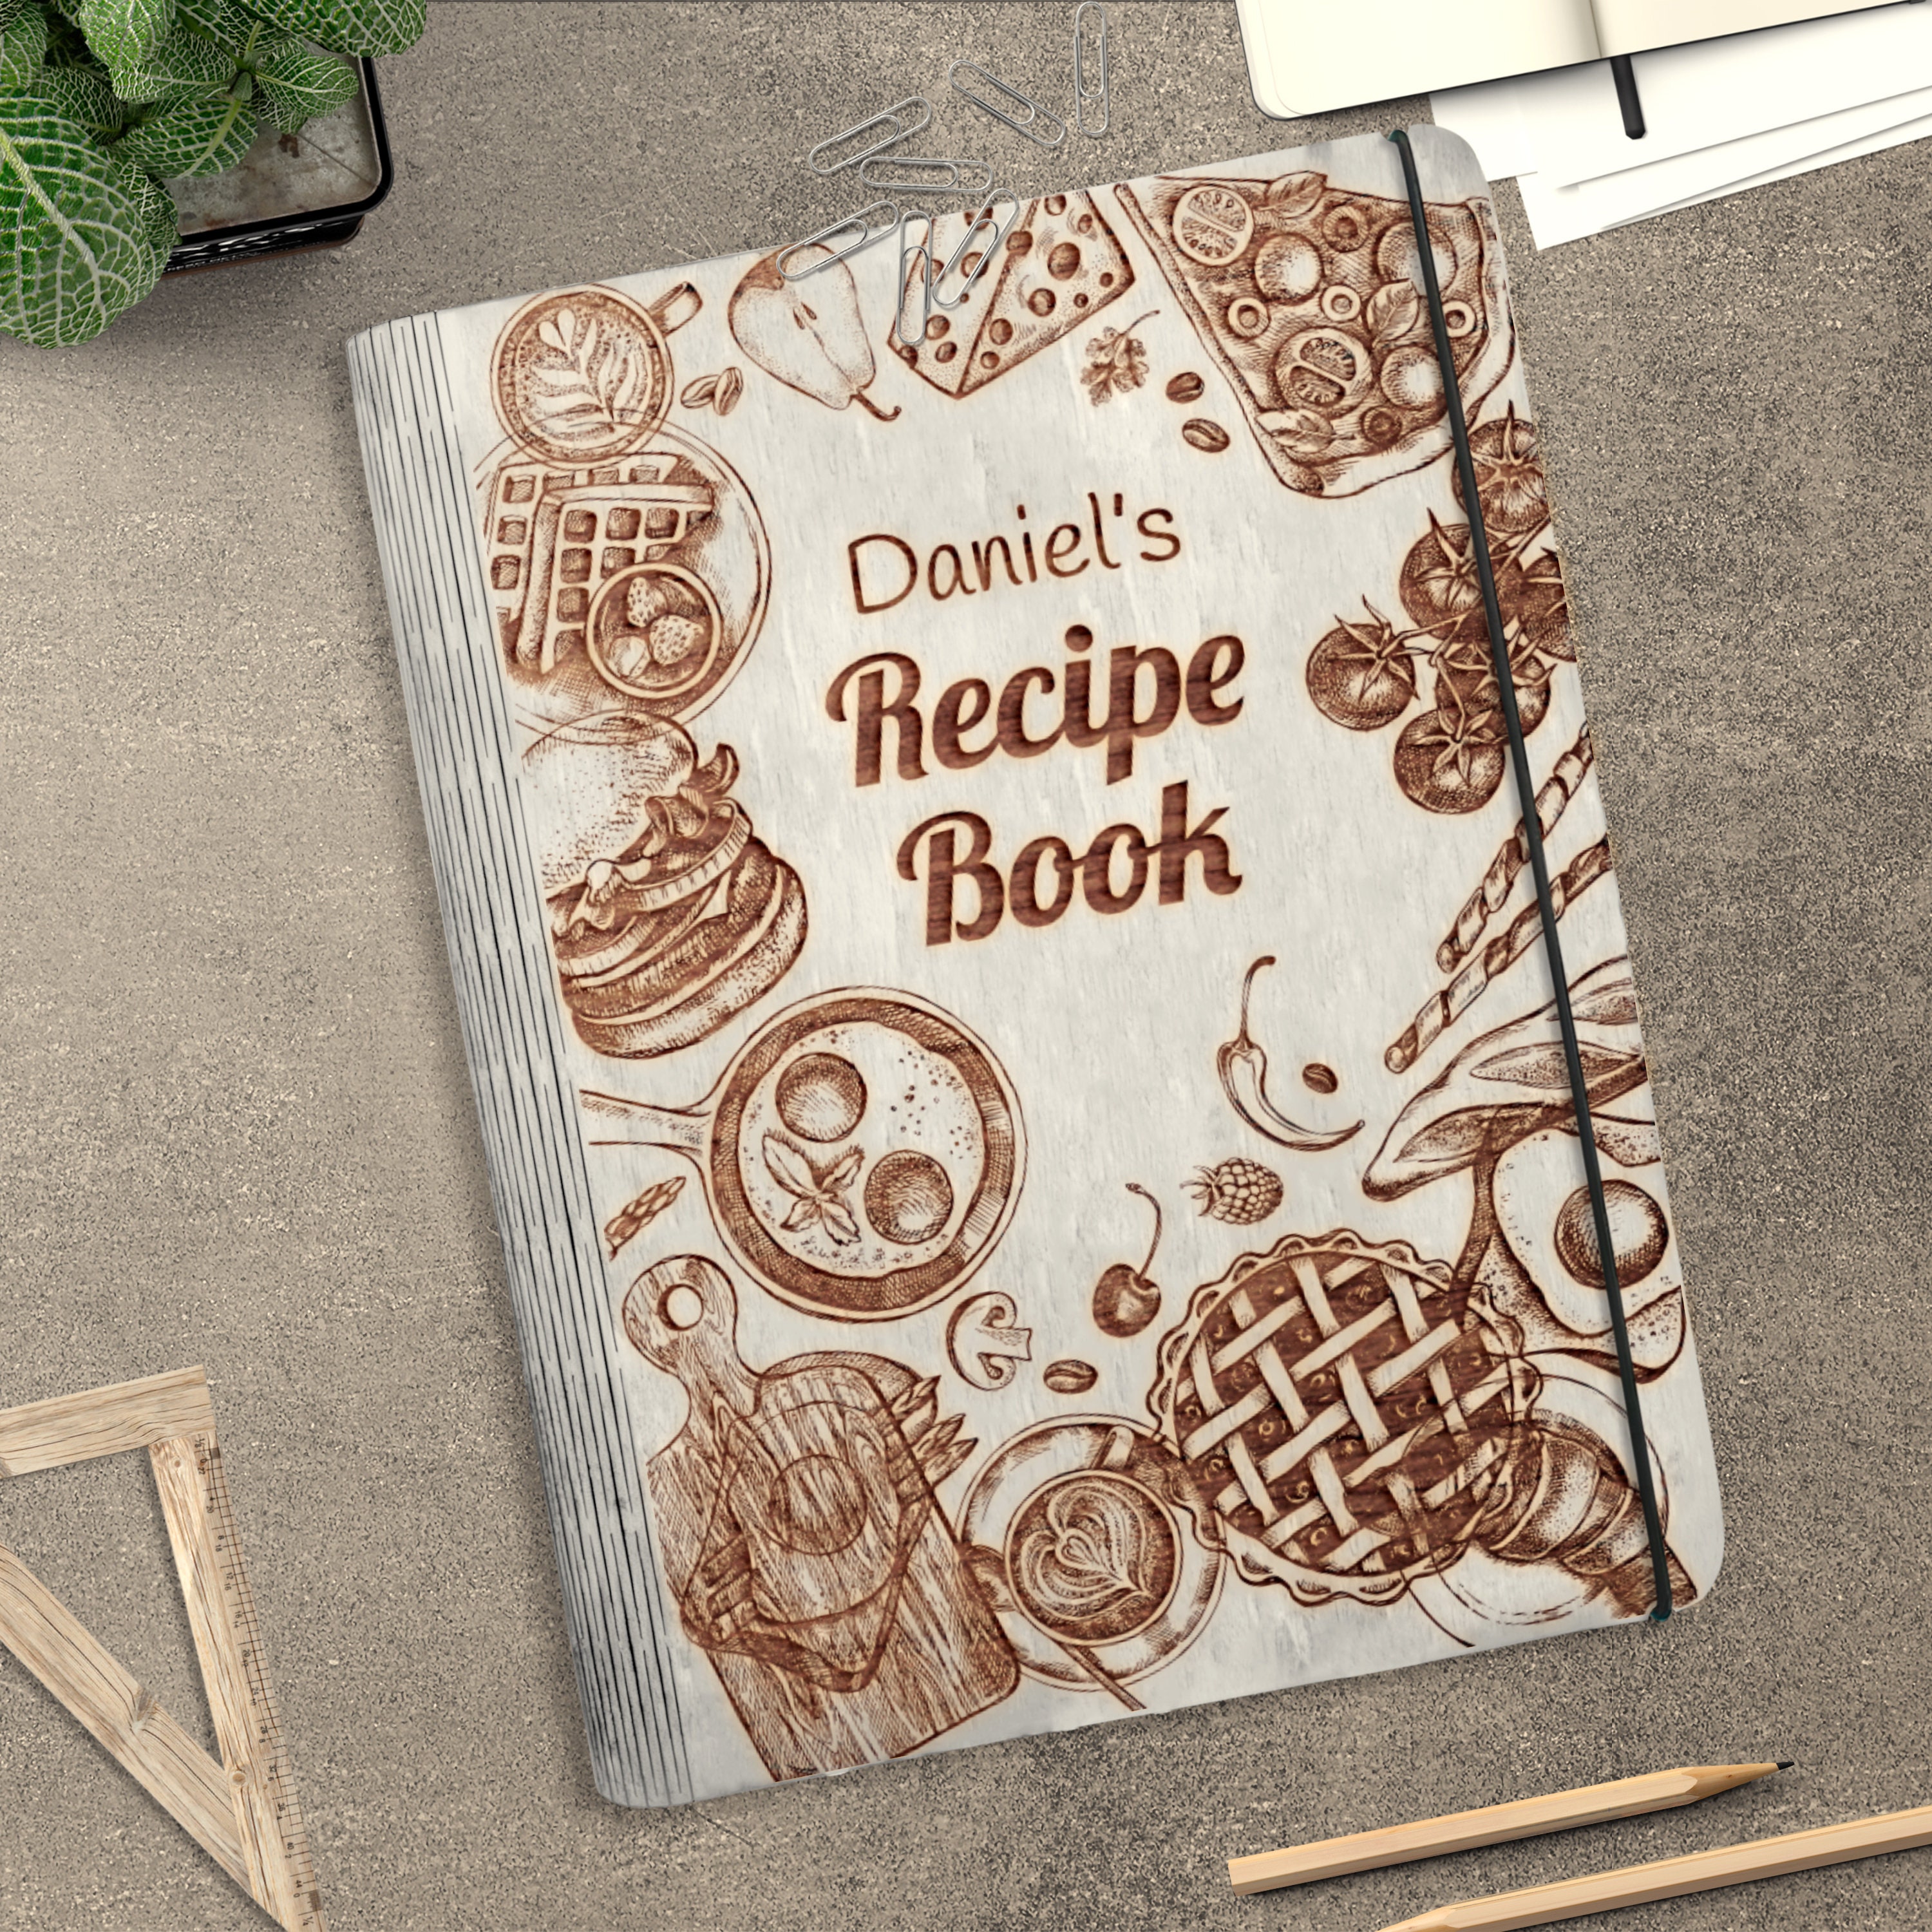 COFICE Recipe Book To Write In Your Own Recipes, 8.5x9.5 Recipe Ring B